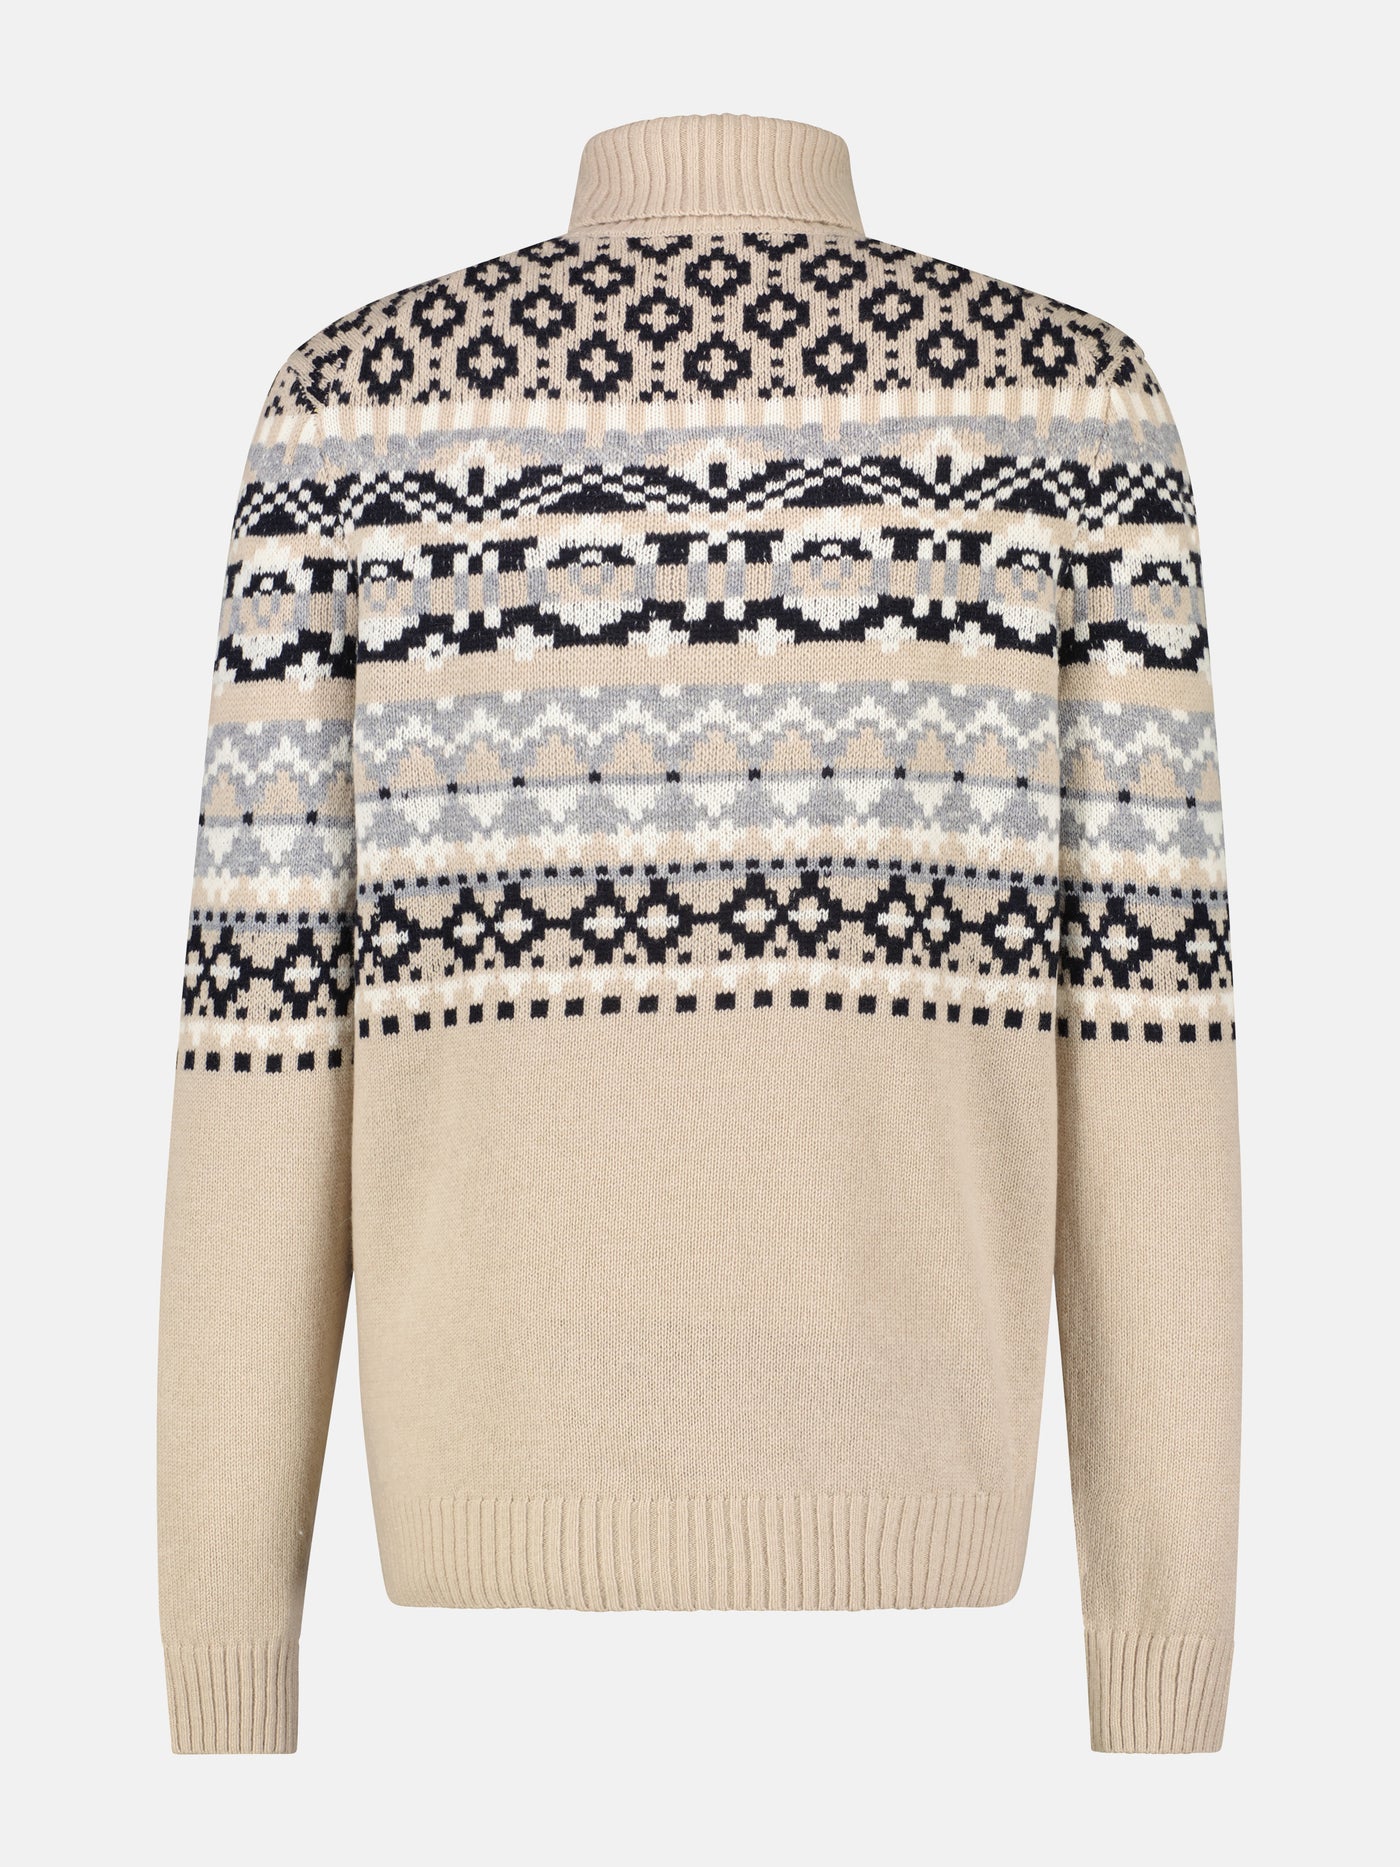 Wool cashmere jacquard sweater. Turtleneck